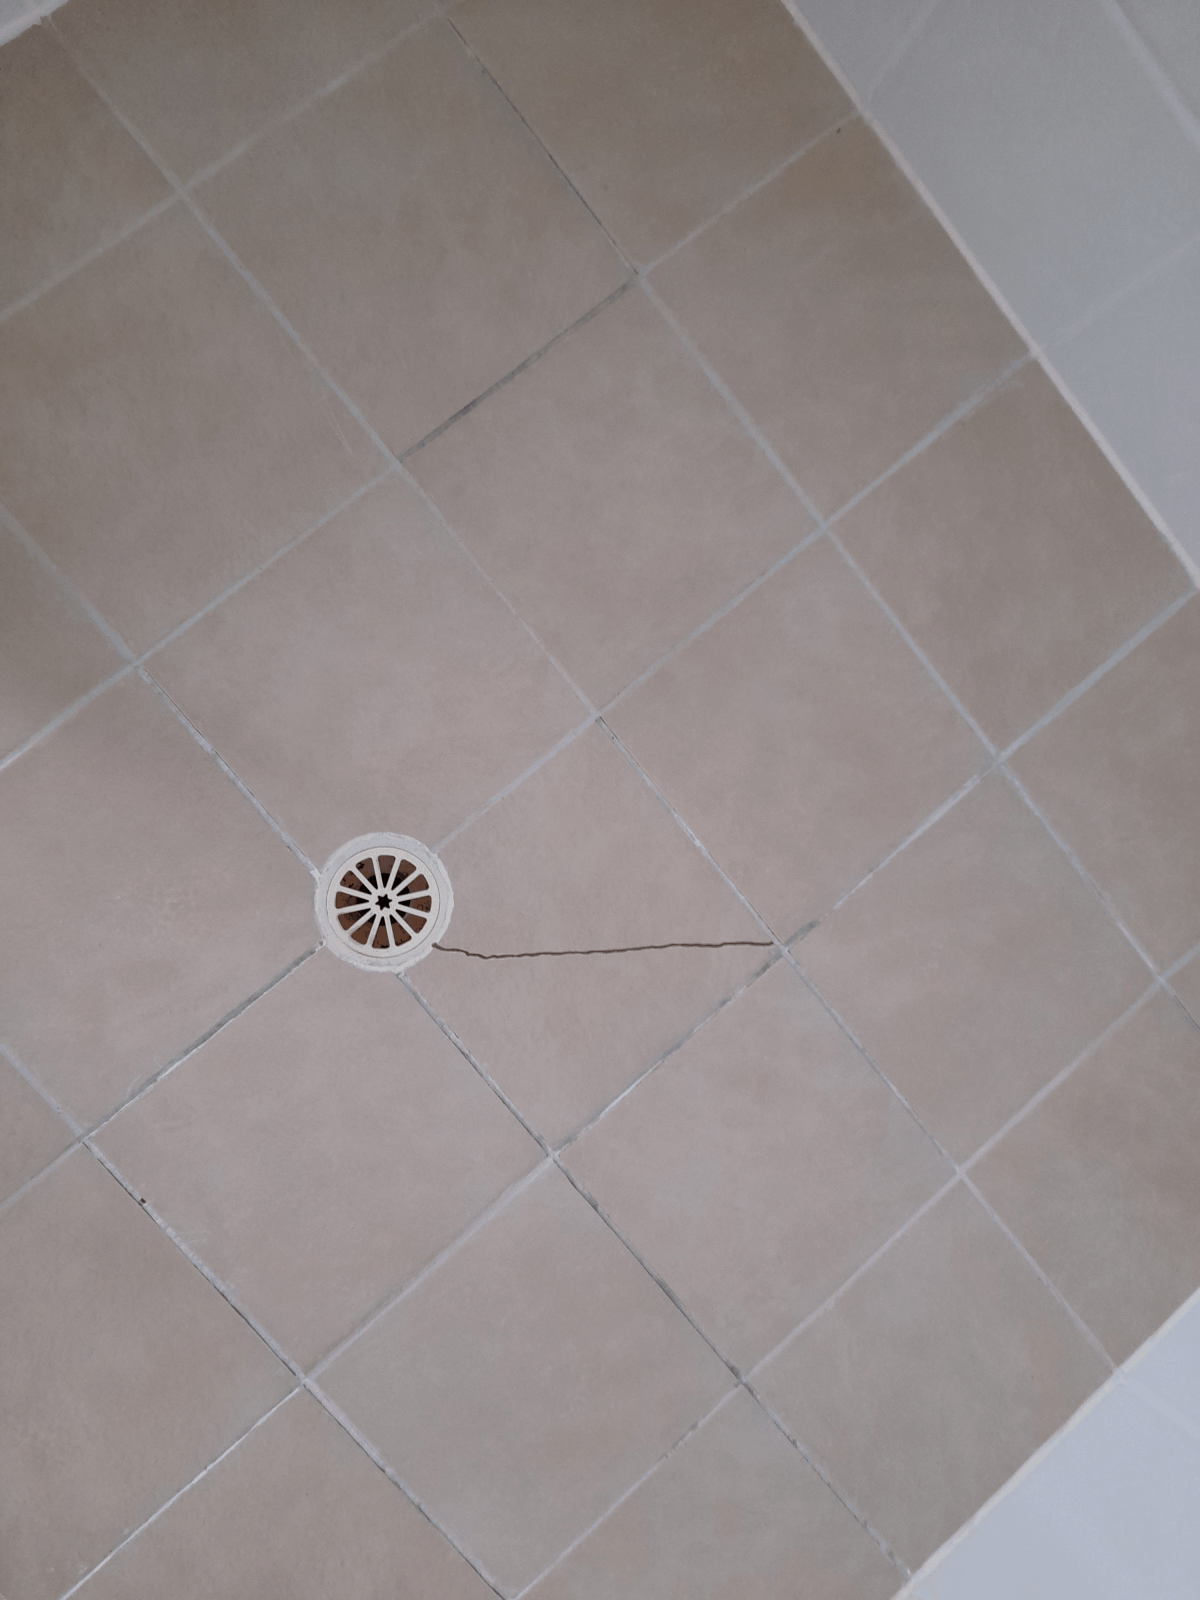 Aquashield Bathrooms - Rectified Tiles - Cracked Tiles - Before